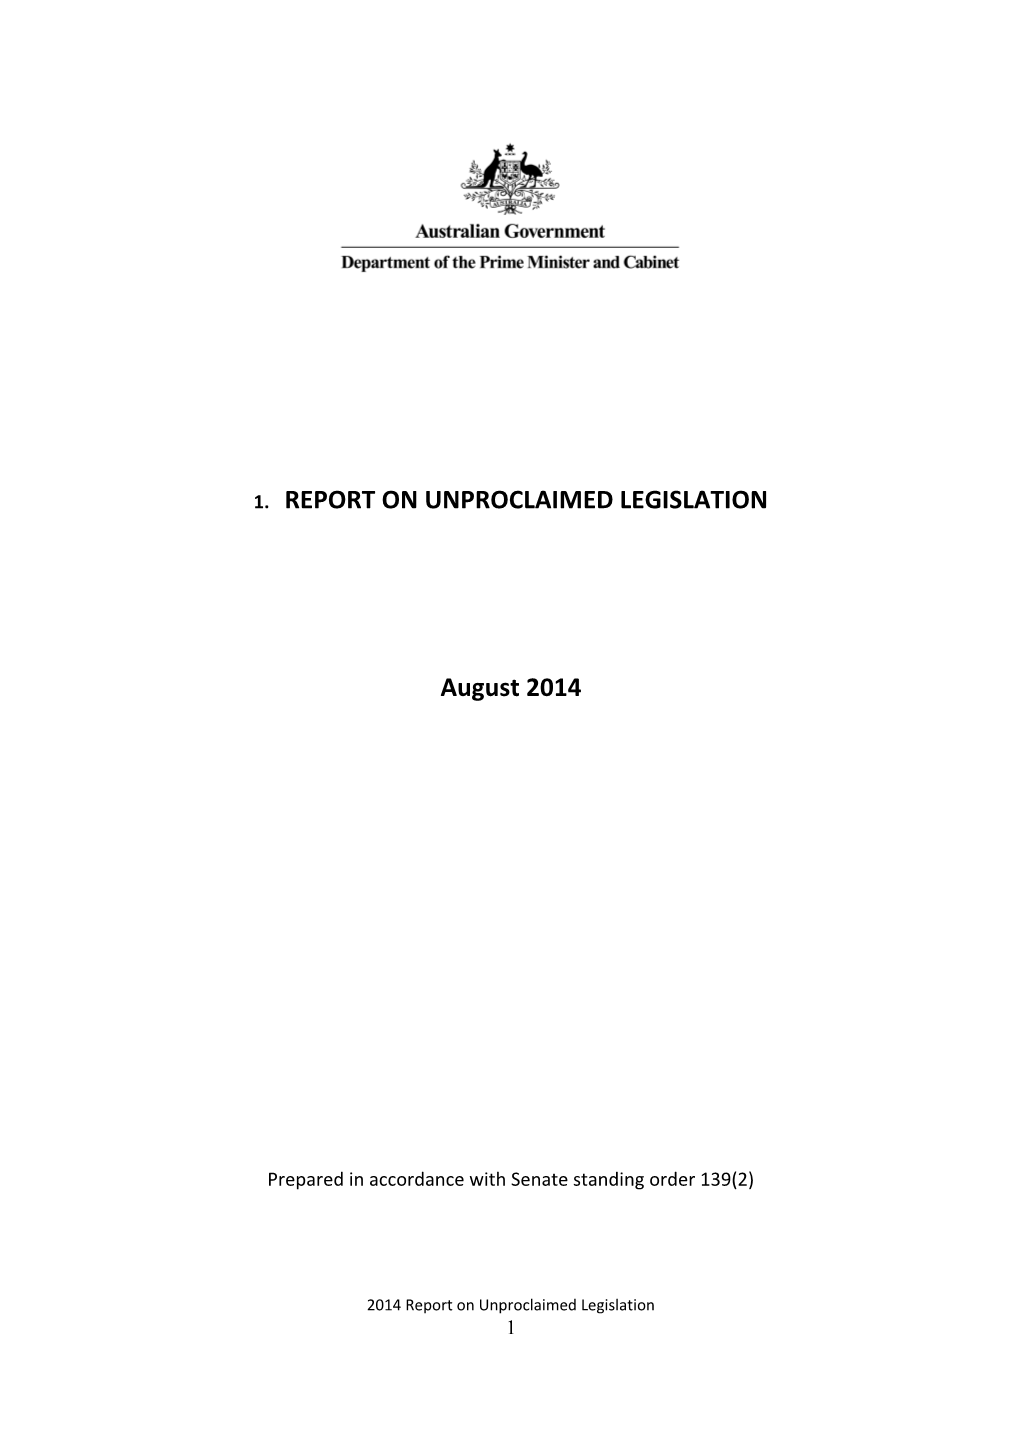 Report on Unproclaimed Legislation